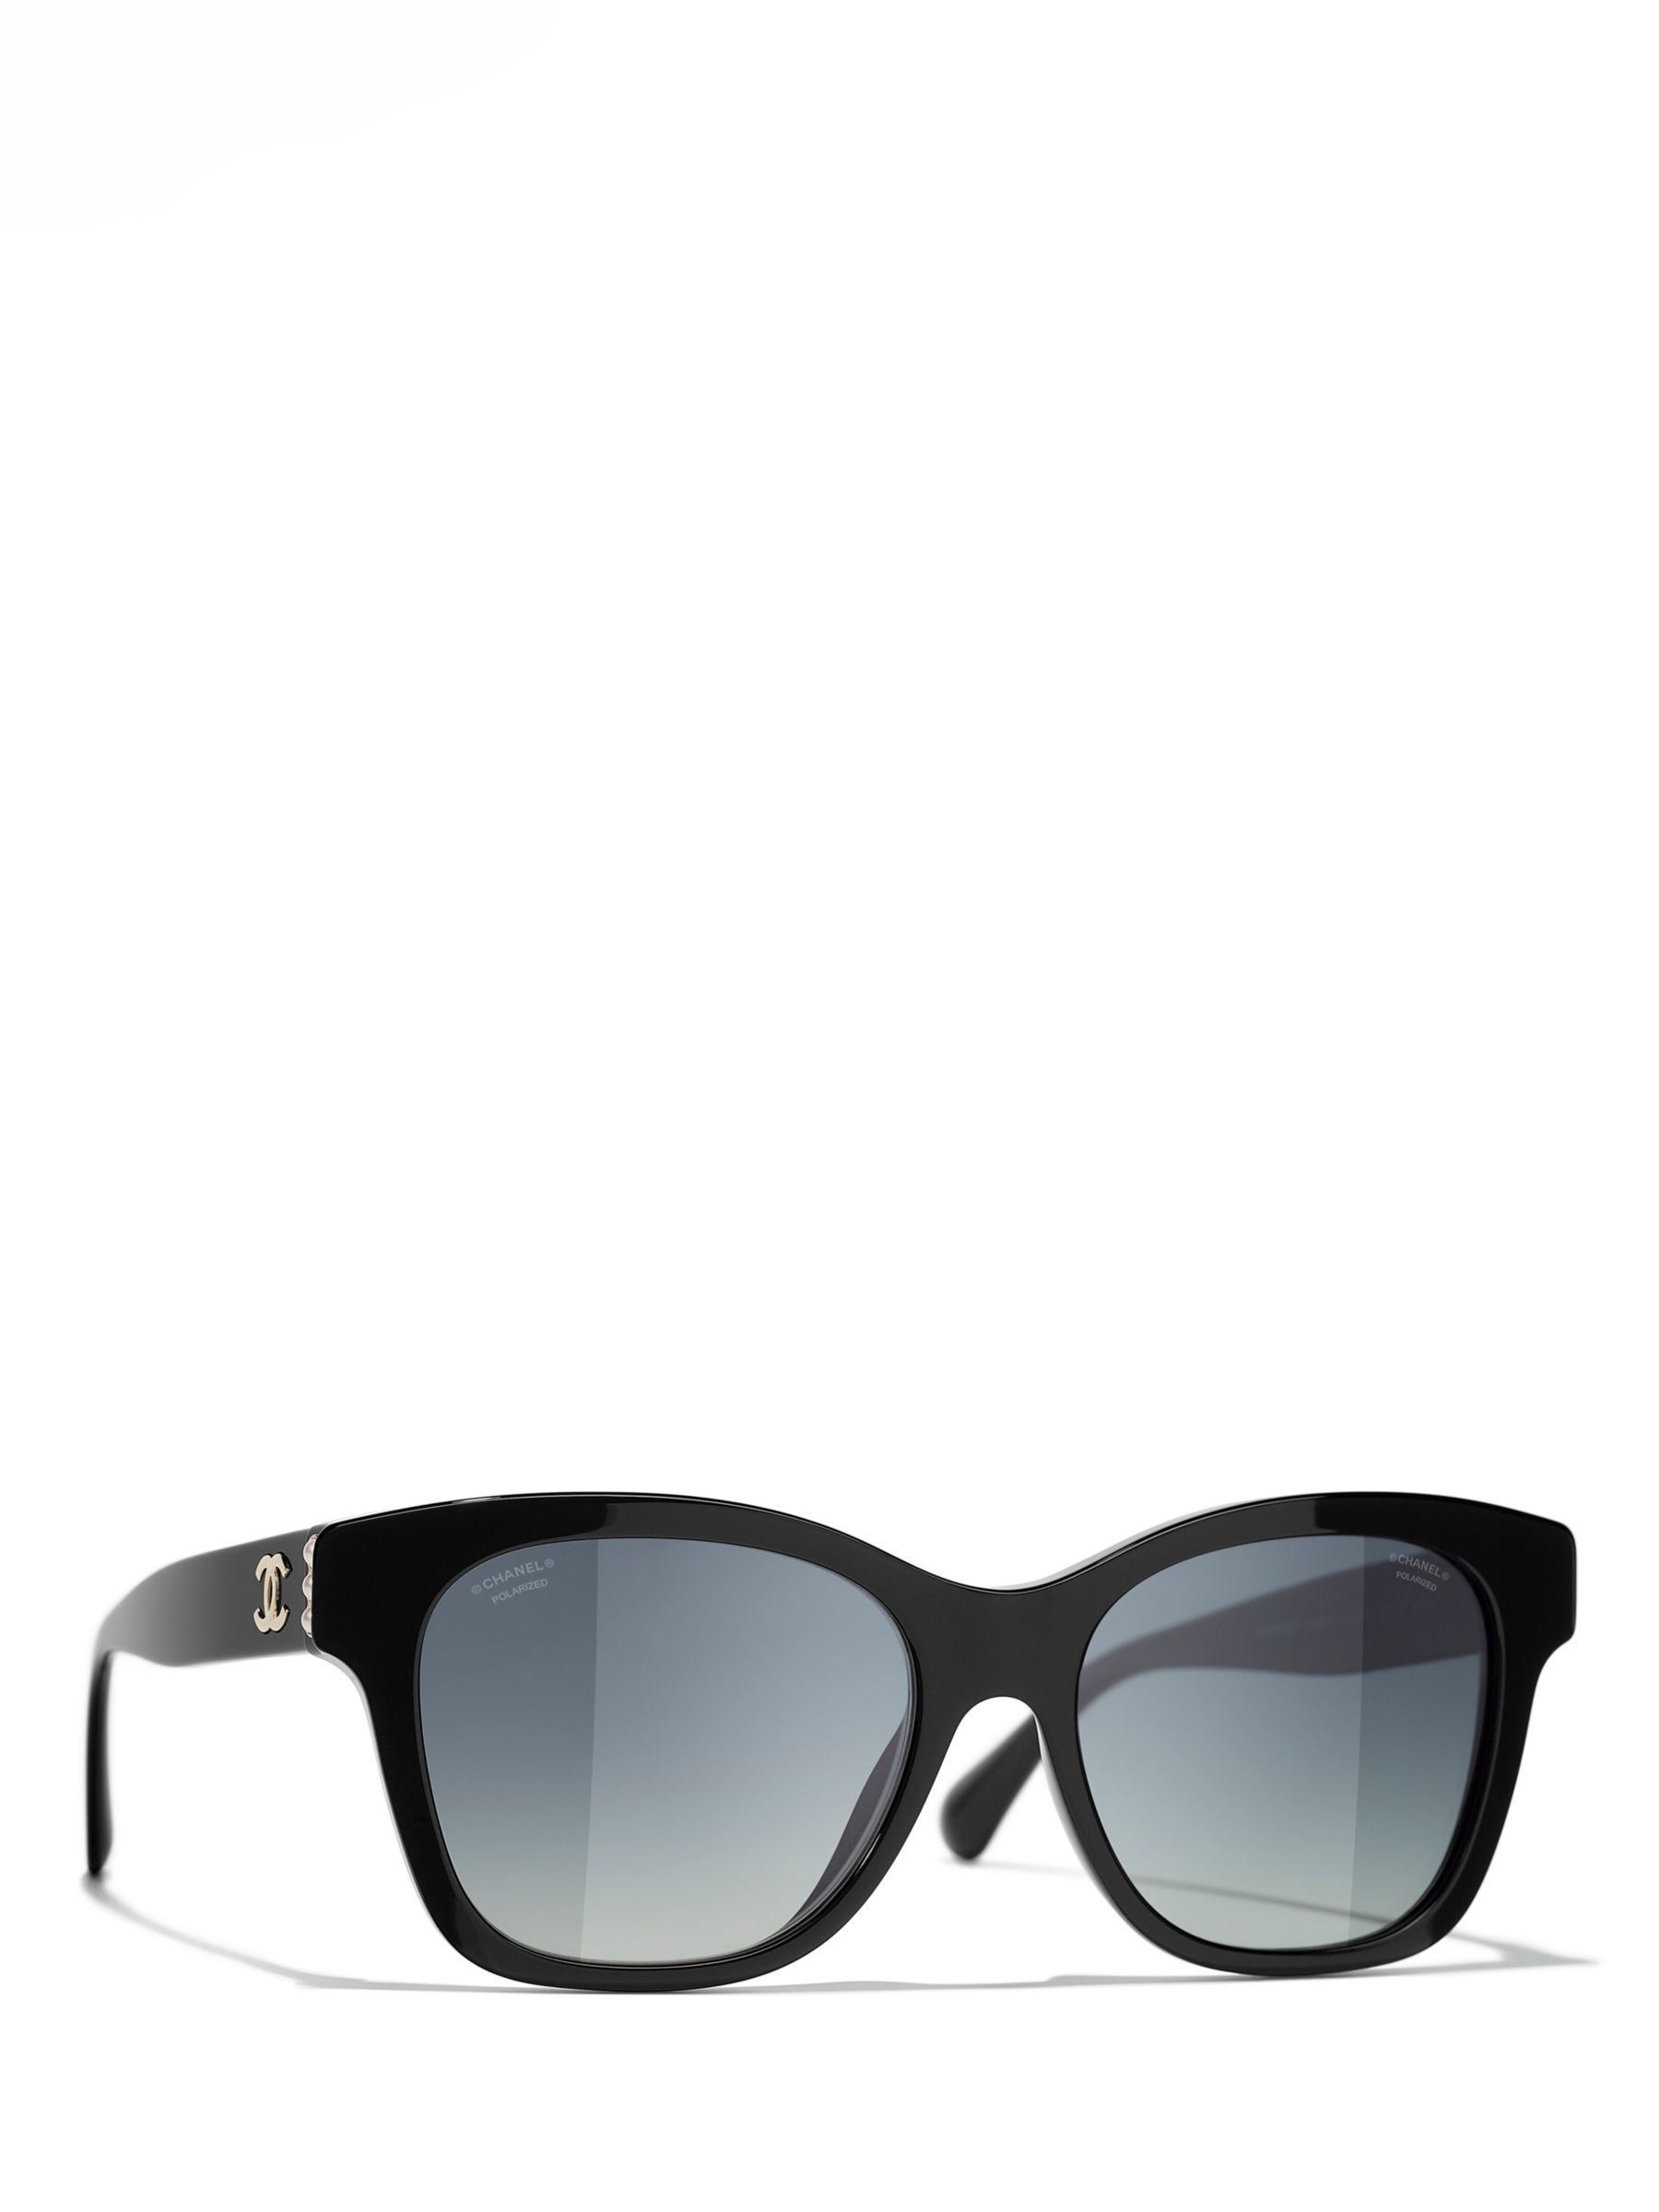 CHANEL Rectangular Sunglasses CH5482H Black/Grey Gradient at John Lewis &  Partners